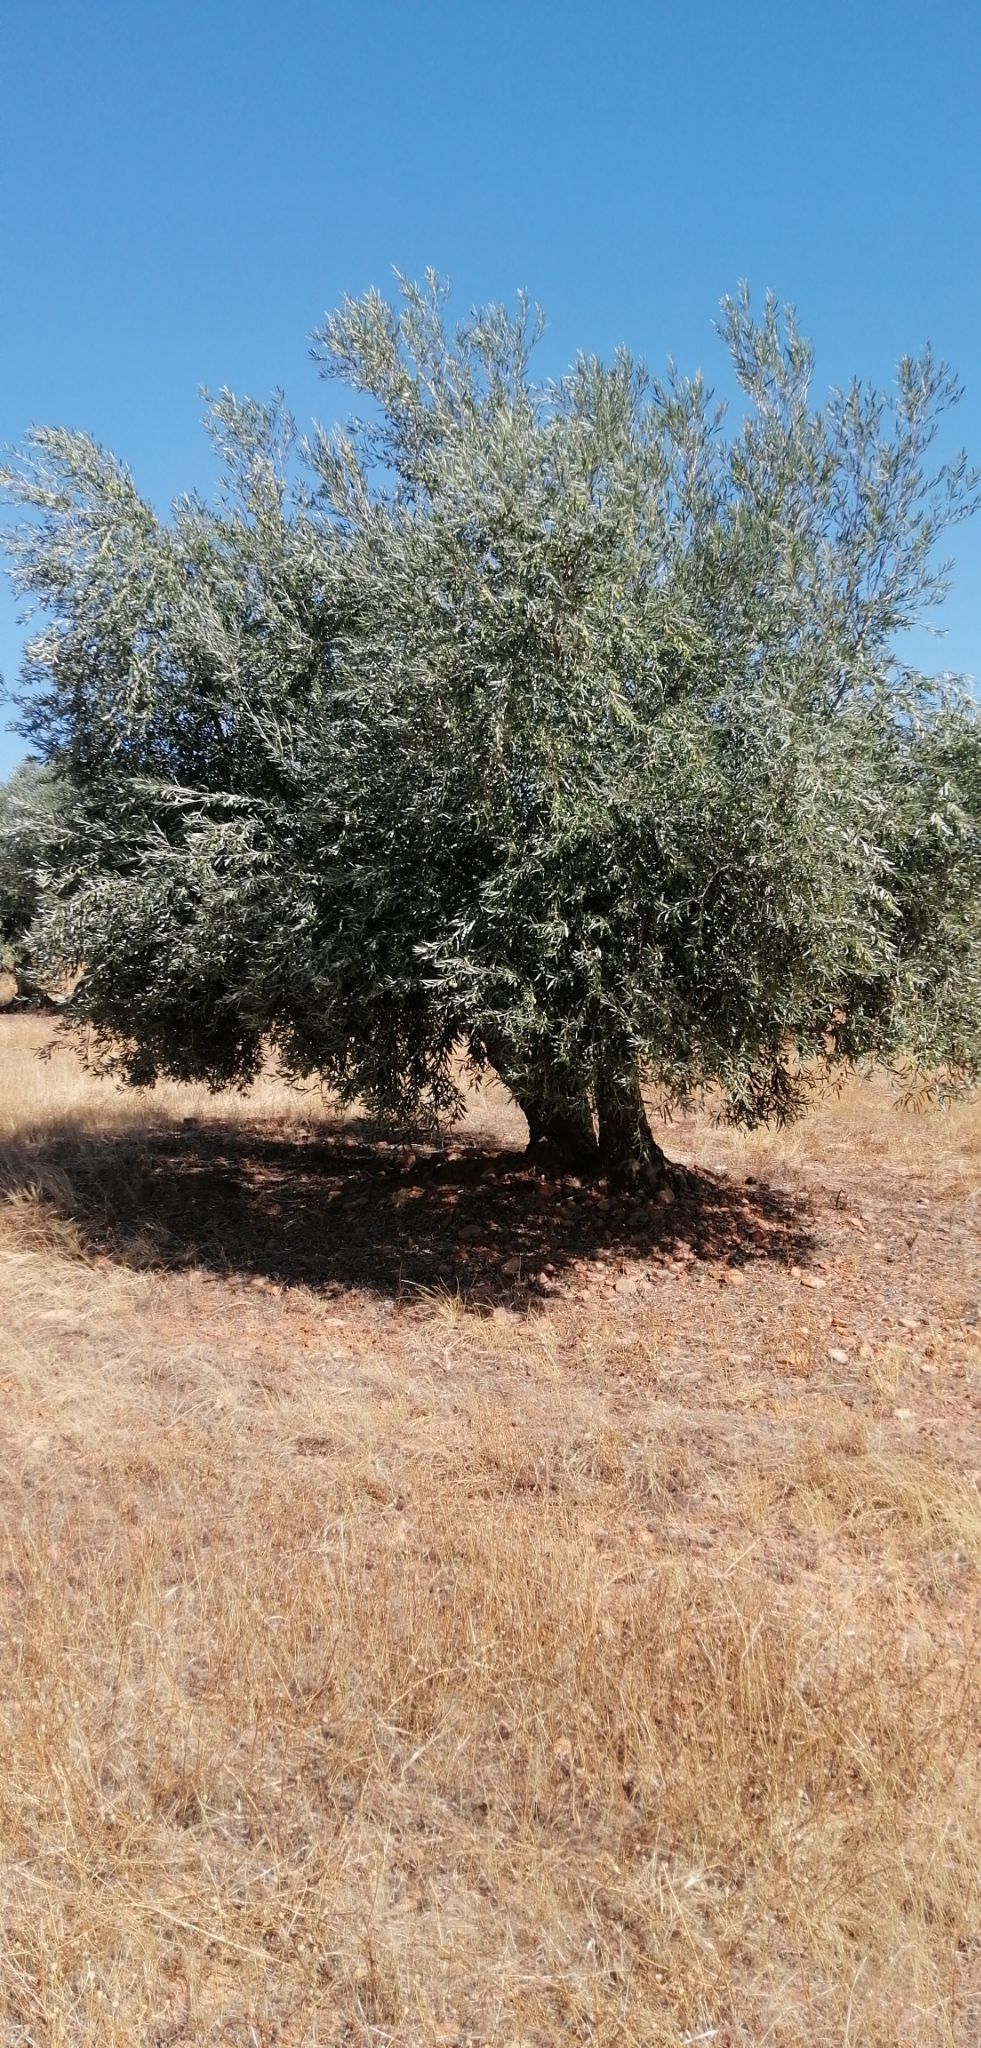 olivo con poda muy densa